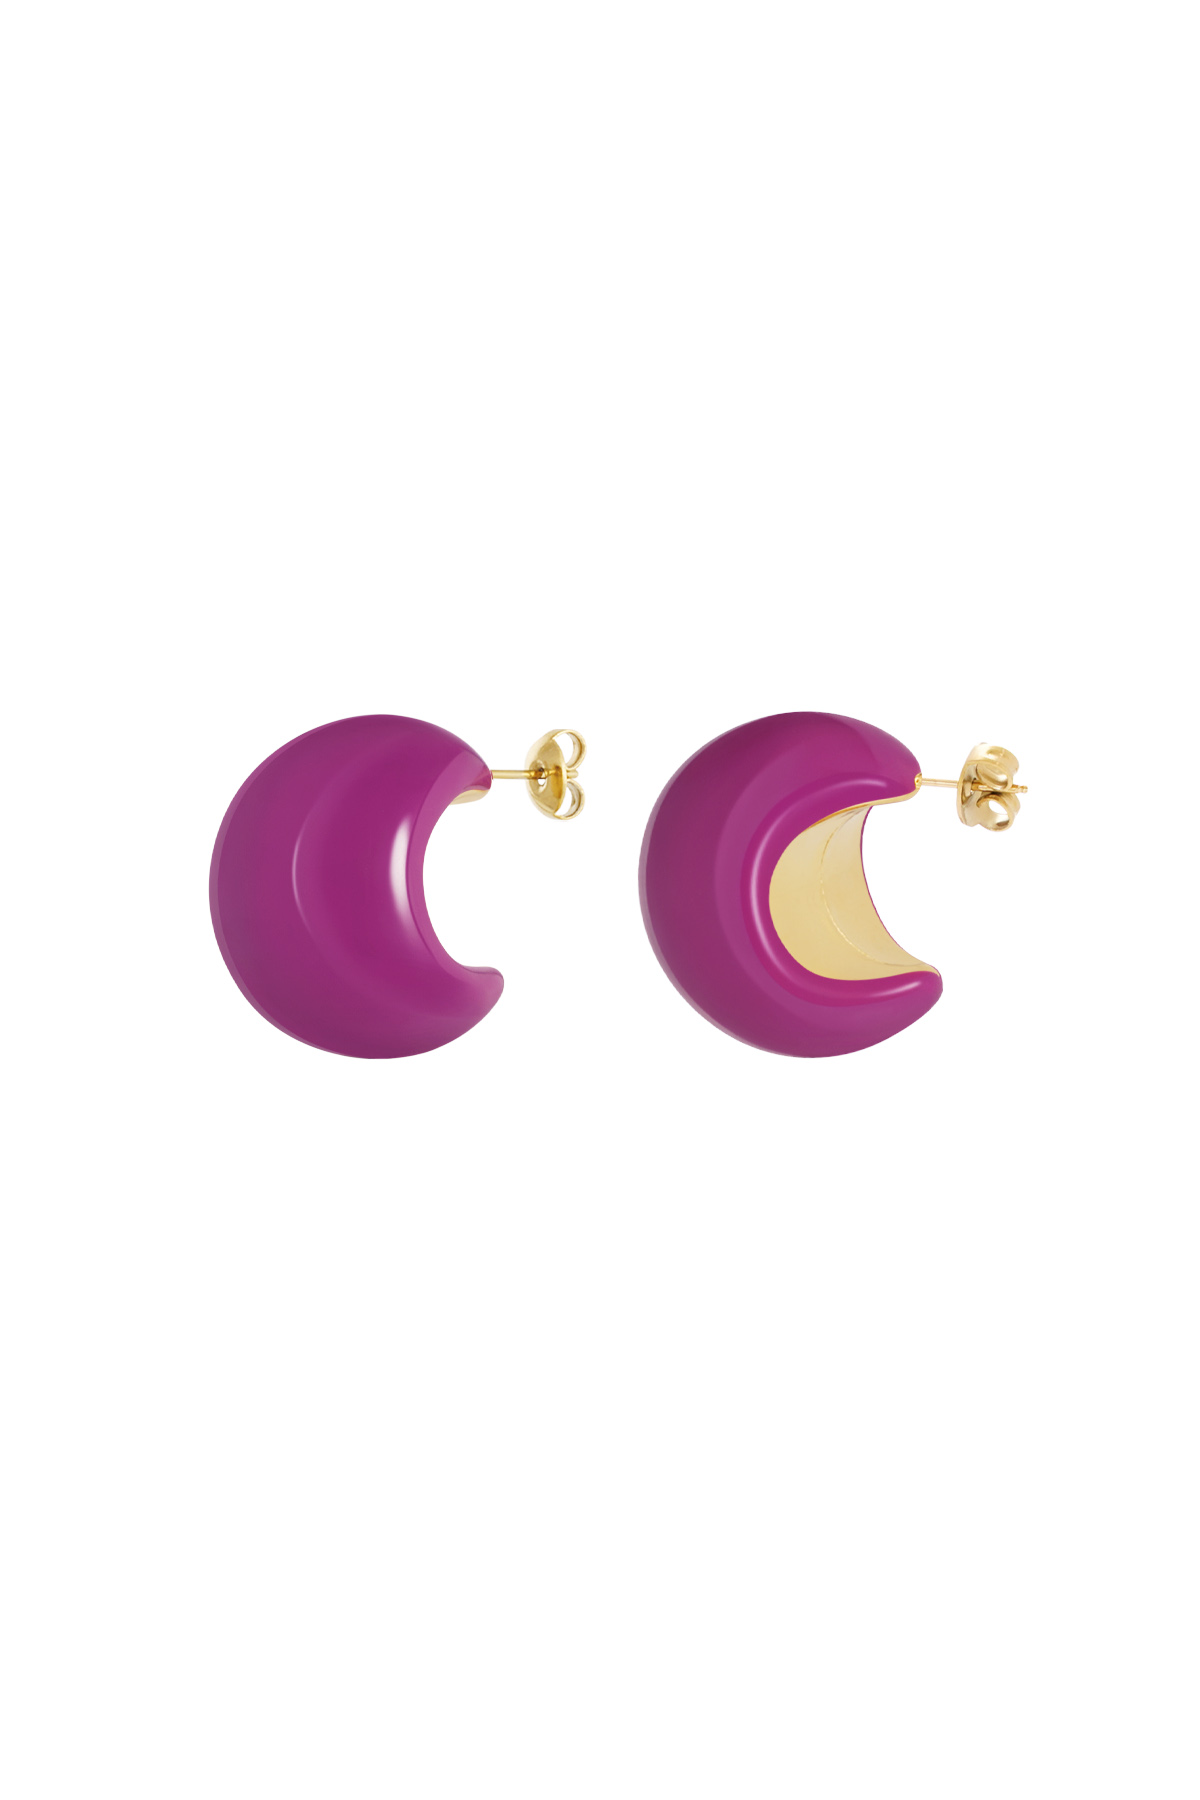 Colorful crescent moon earrings - fuchsia h5 